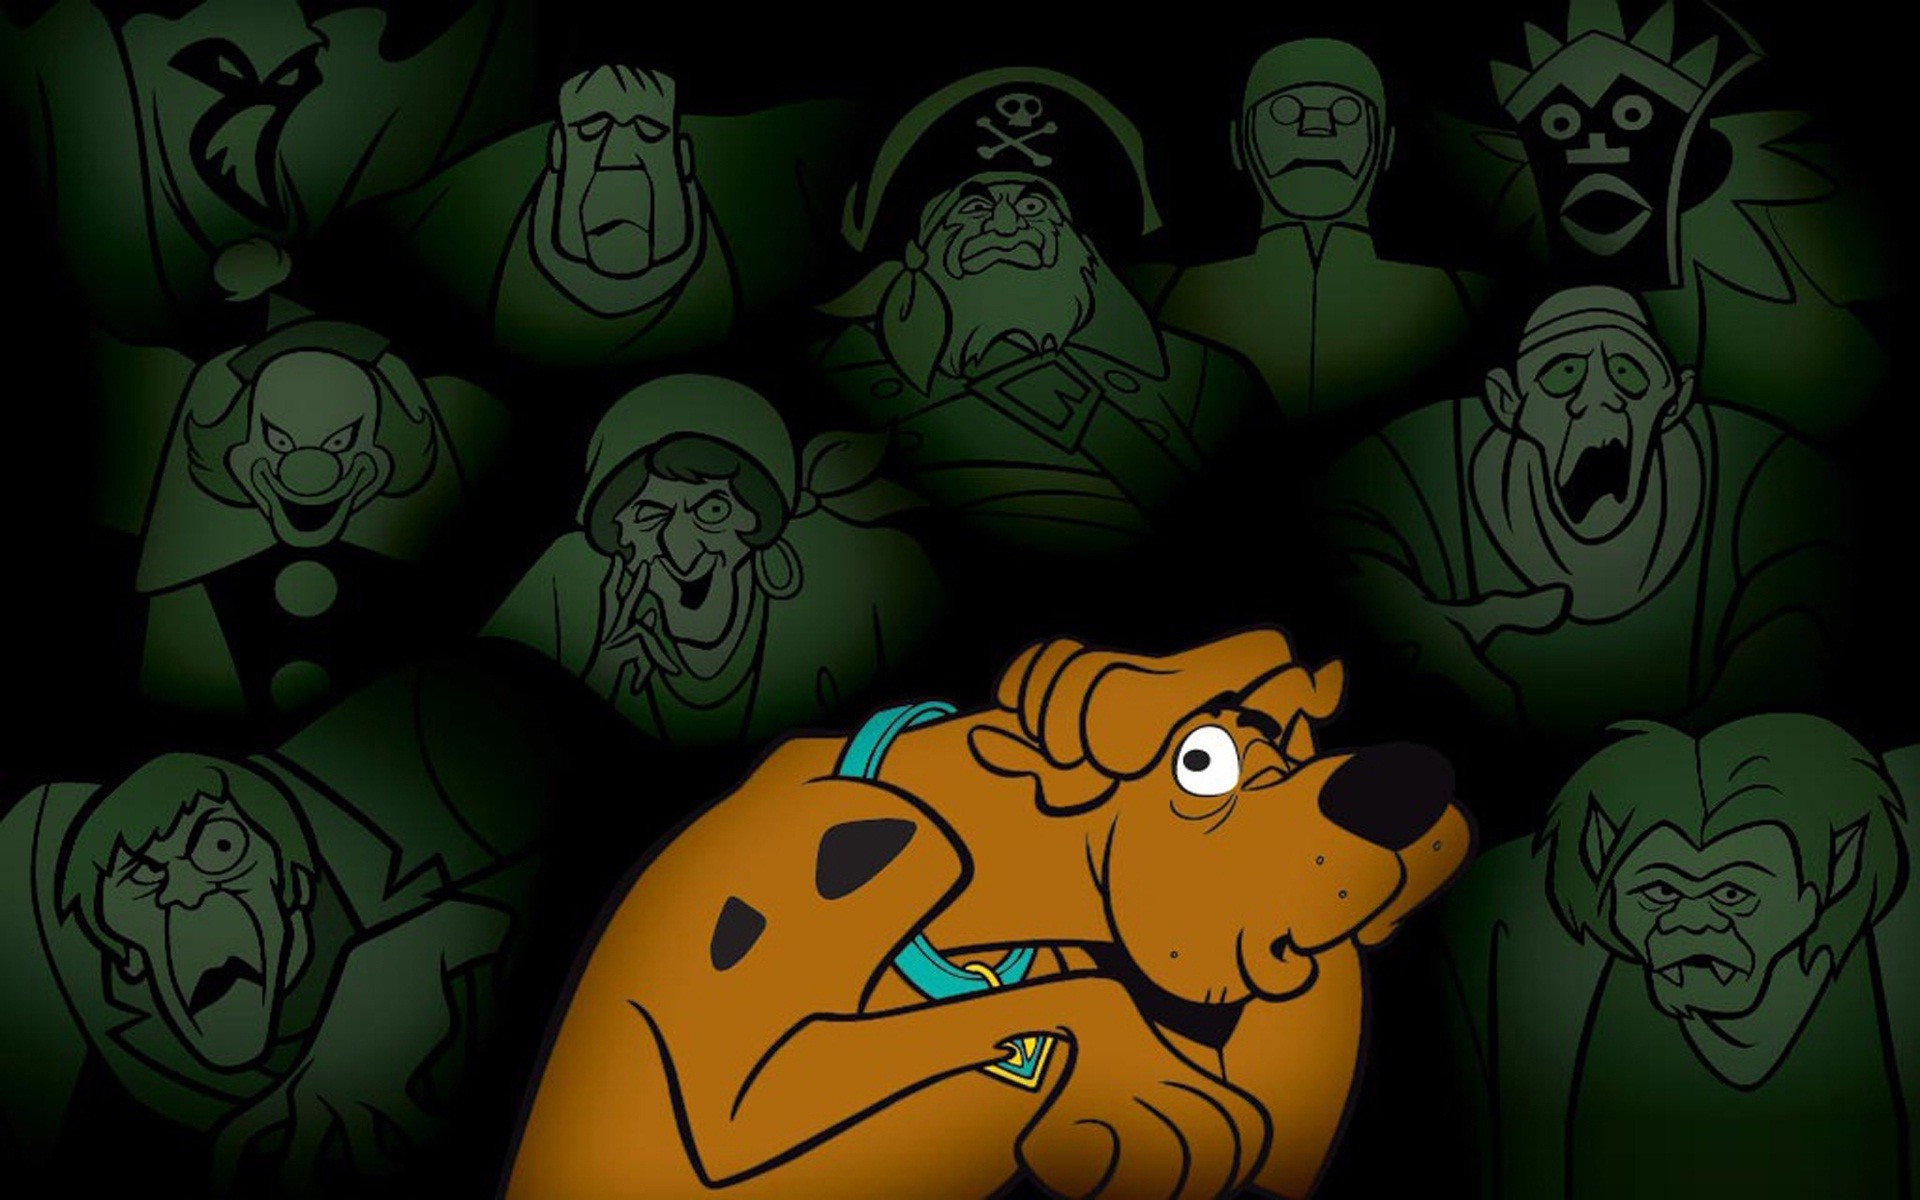 Download Scoob-Scooby Doo Wallpaper Free for Android - Scoob-Scooby Doo  Wallpaper APK Download - STEPrimo.com